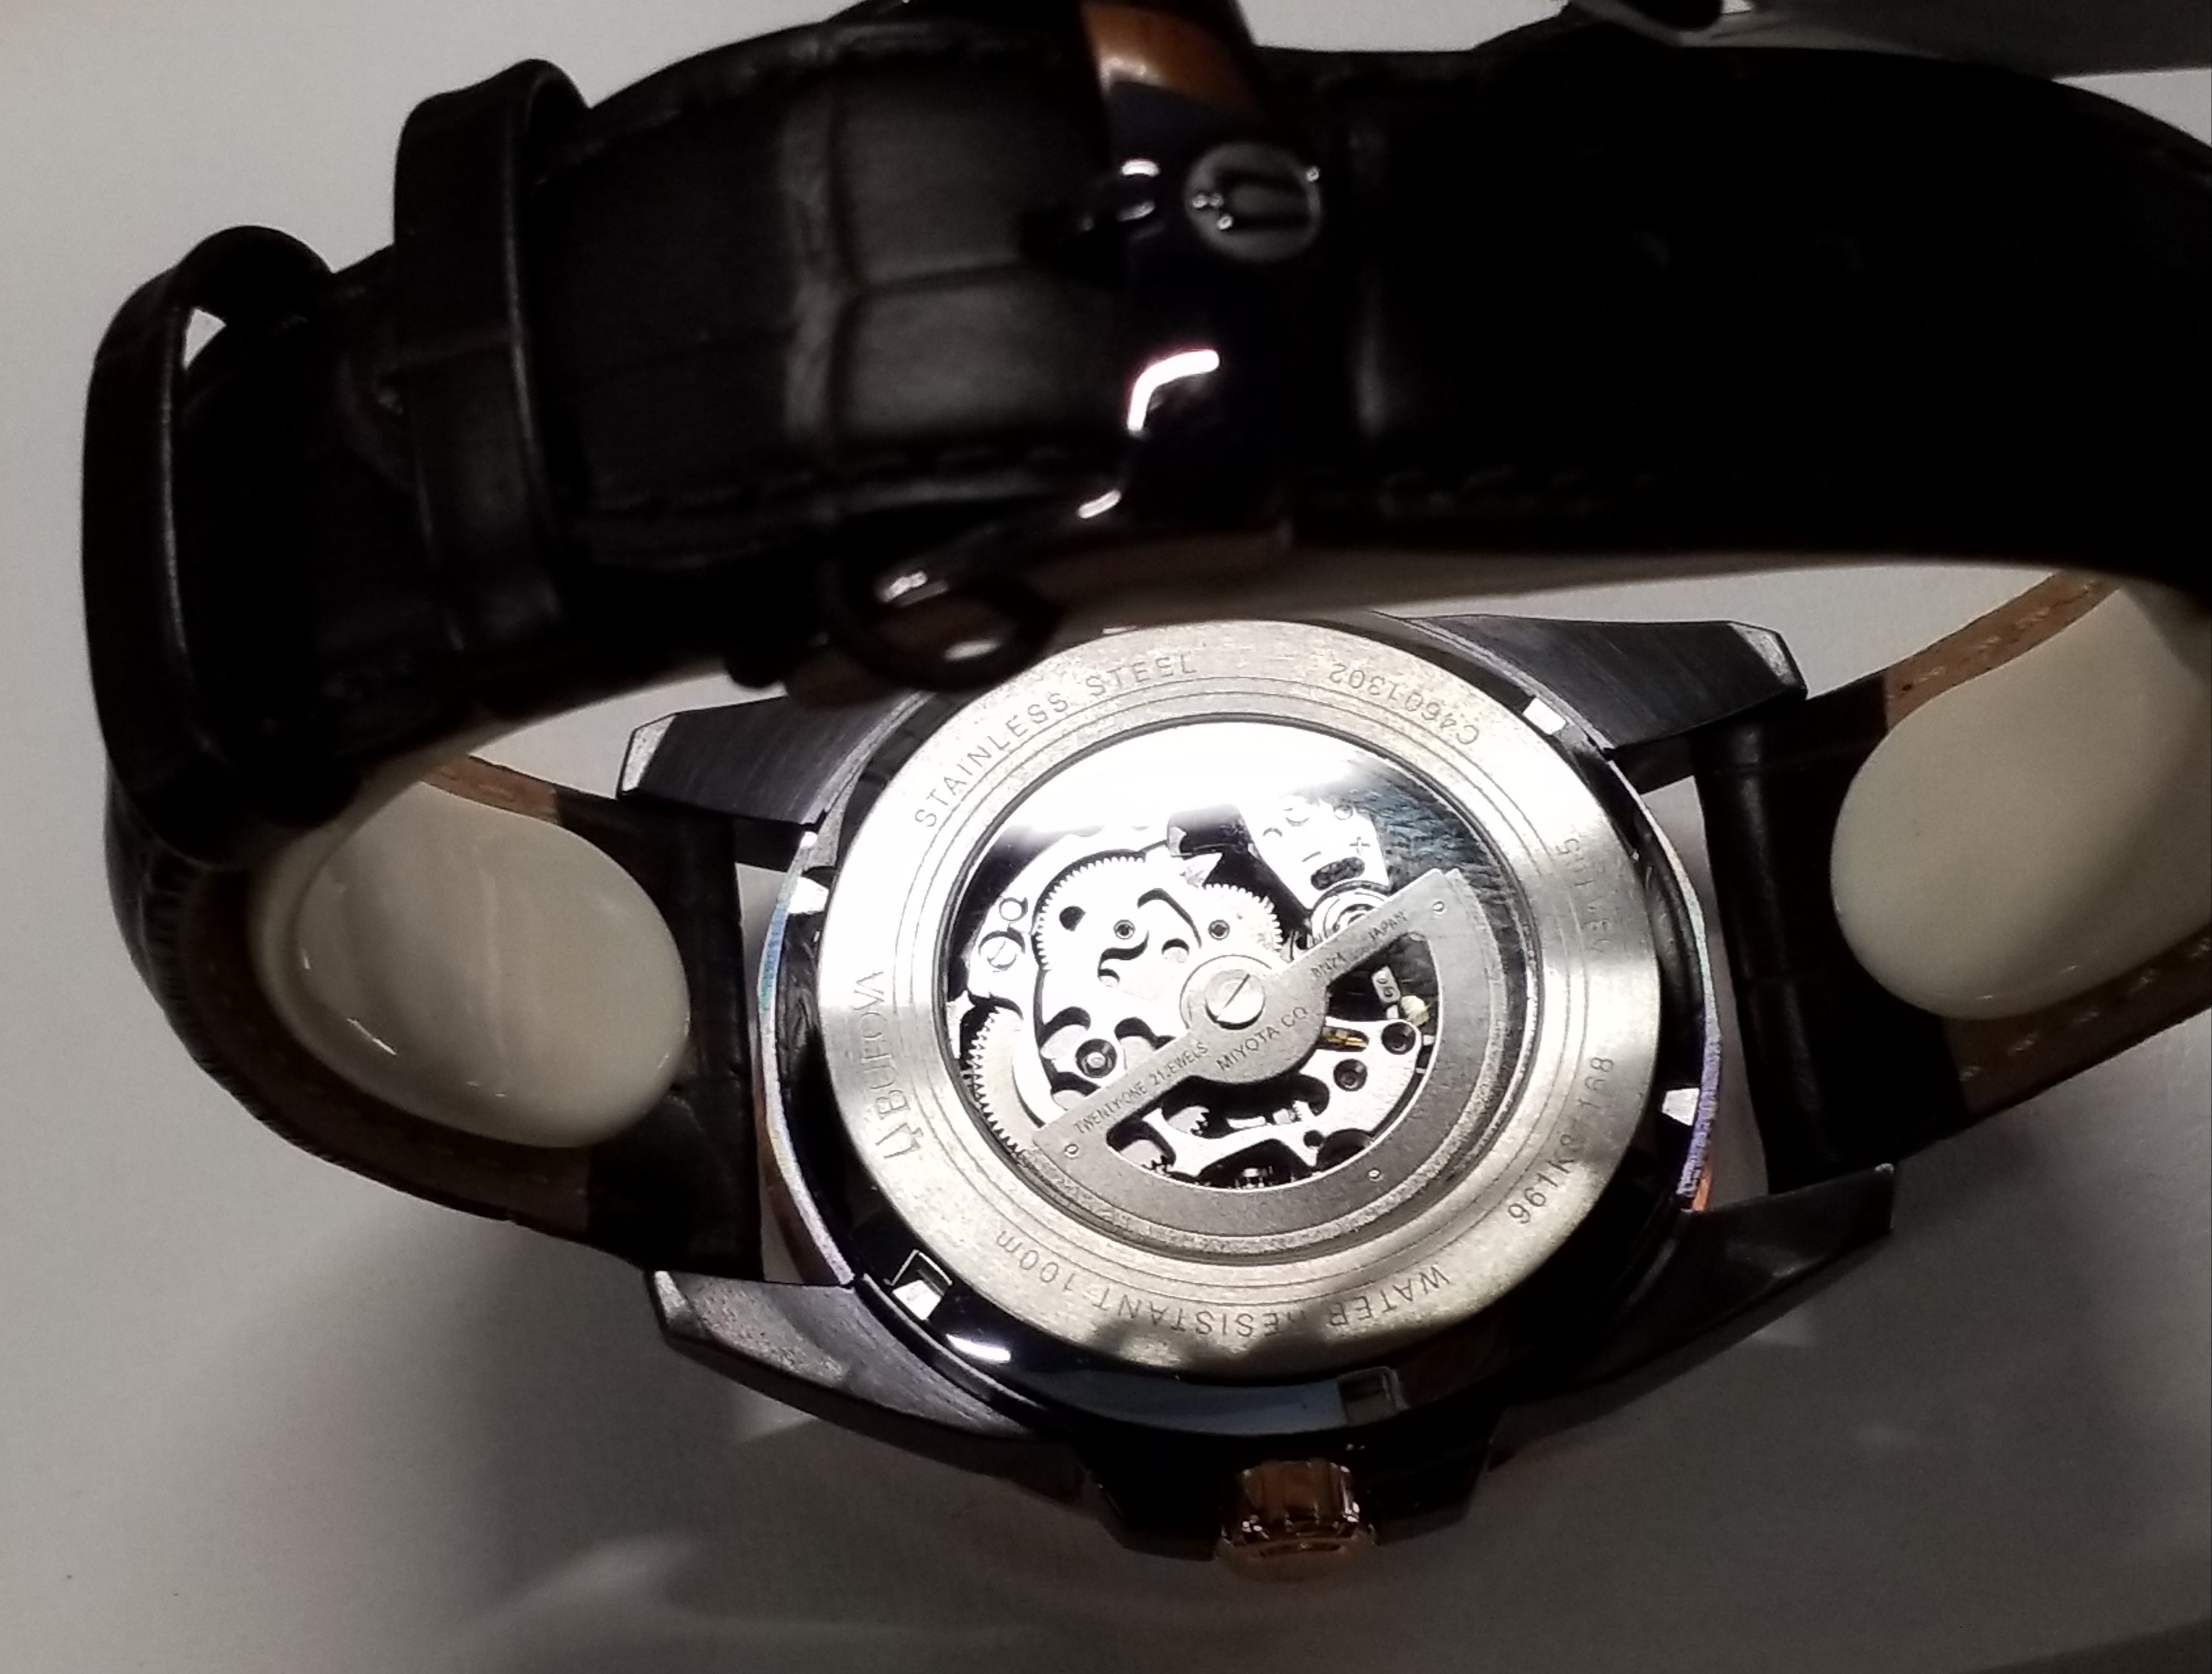 Bulova Brown Leather Watch - Mechanical